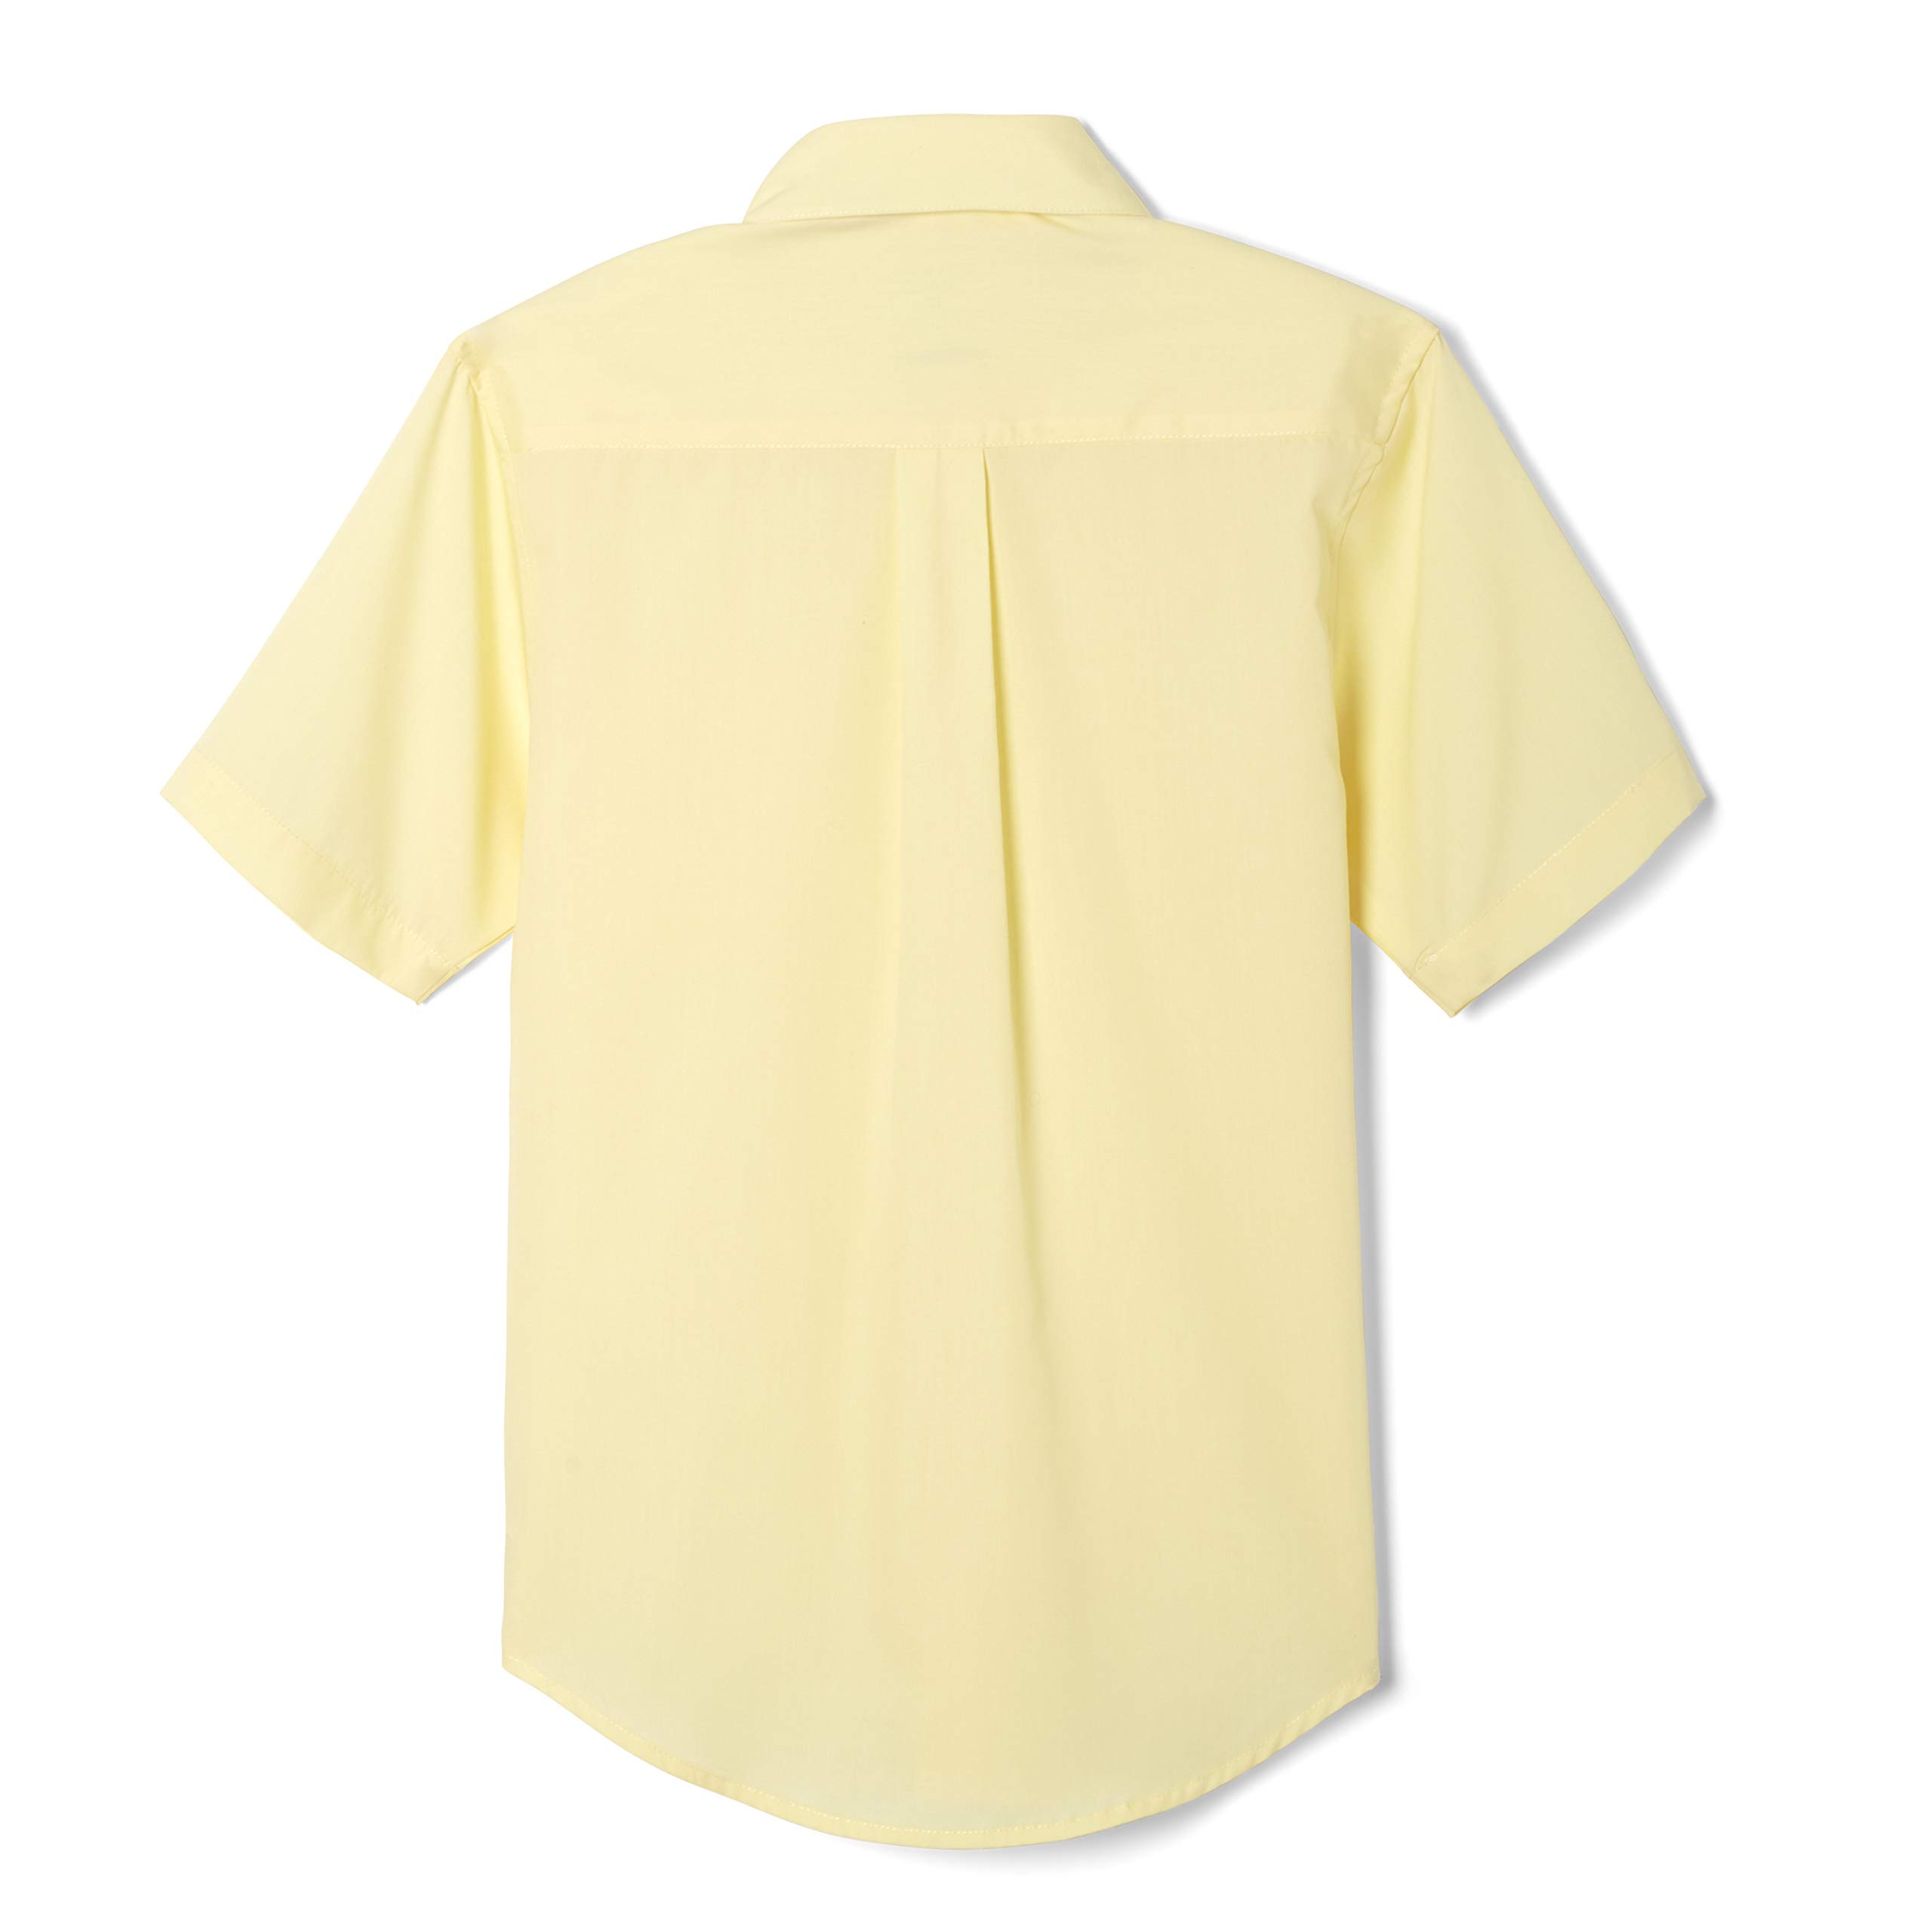 French Toast Boys Short Sleeve Classic Poplin Dress Shirt